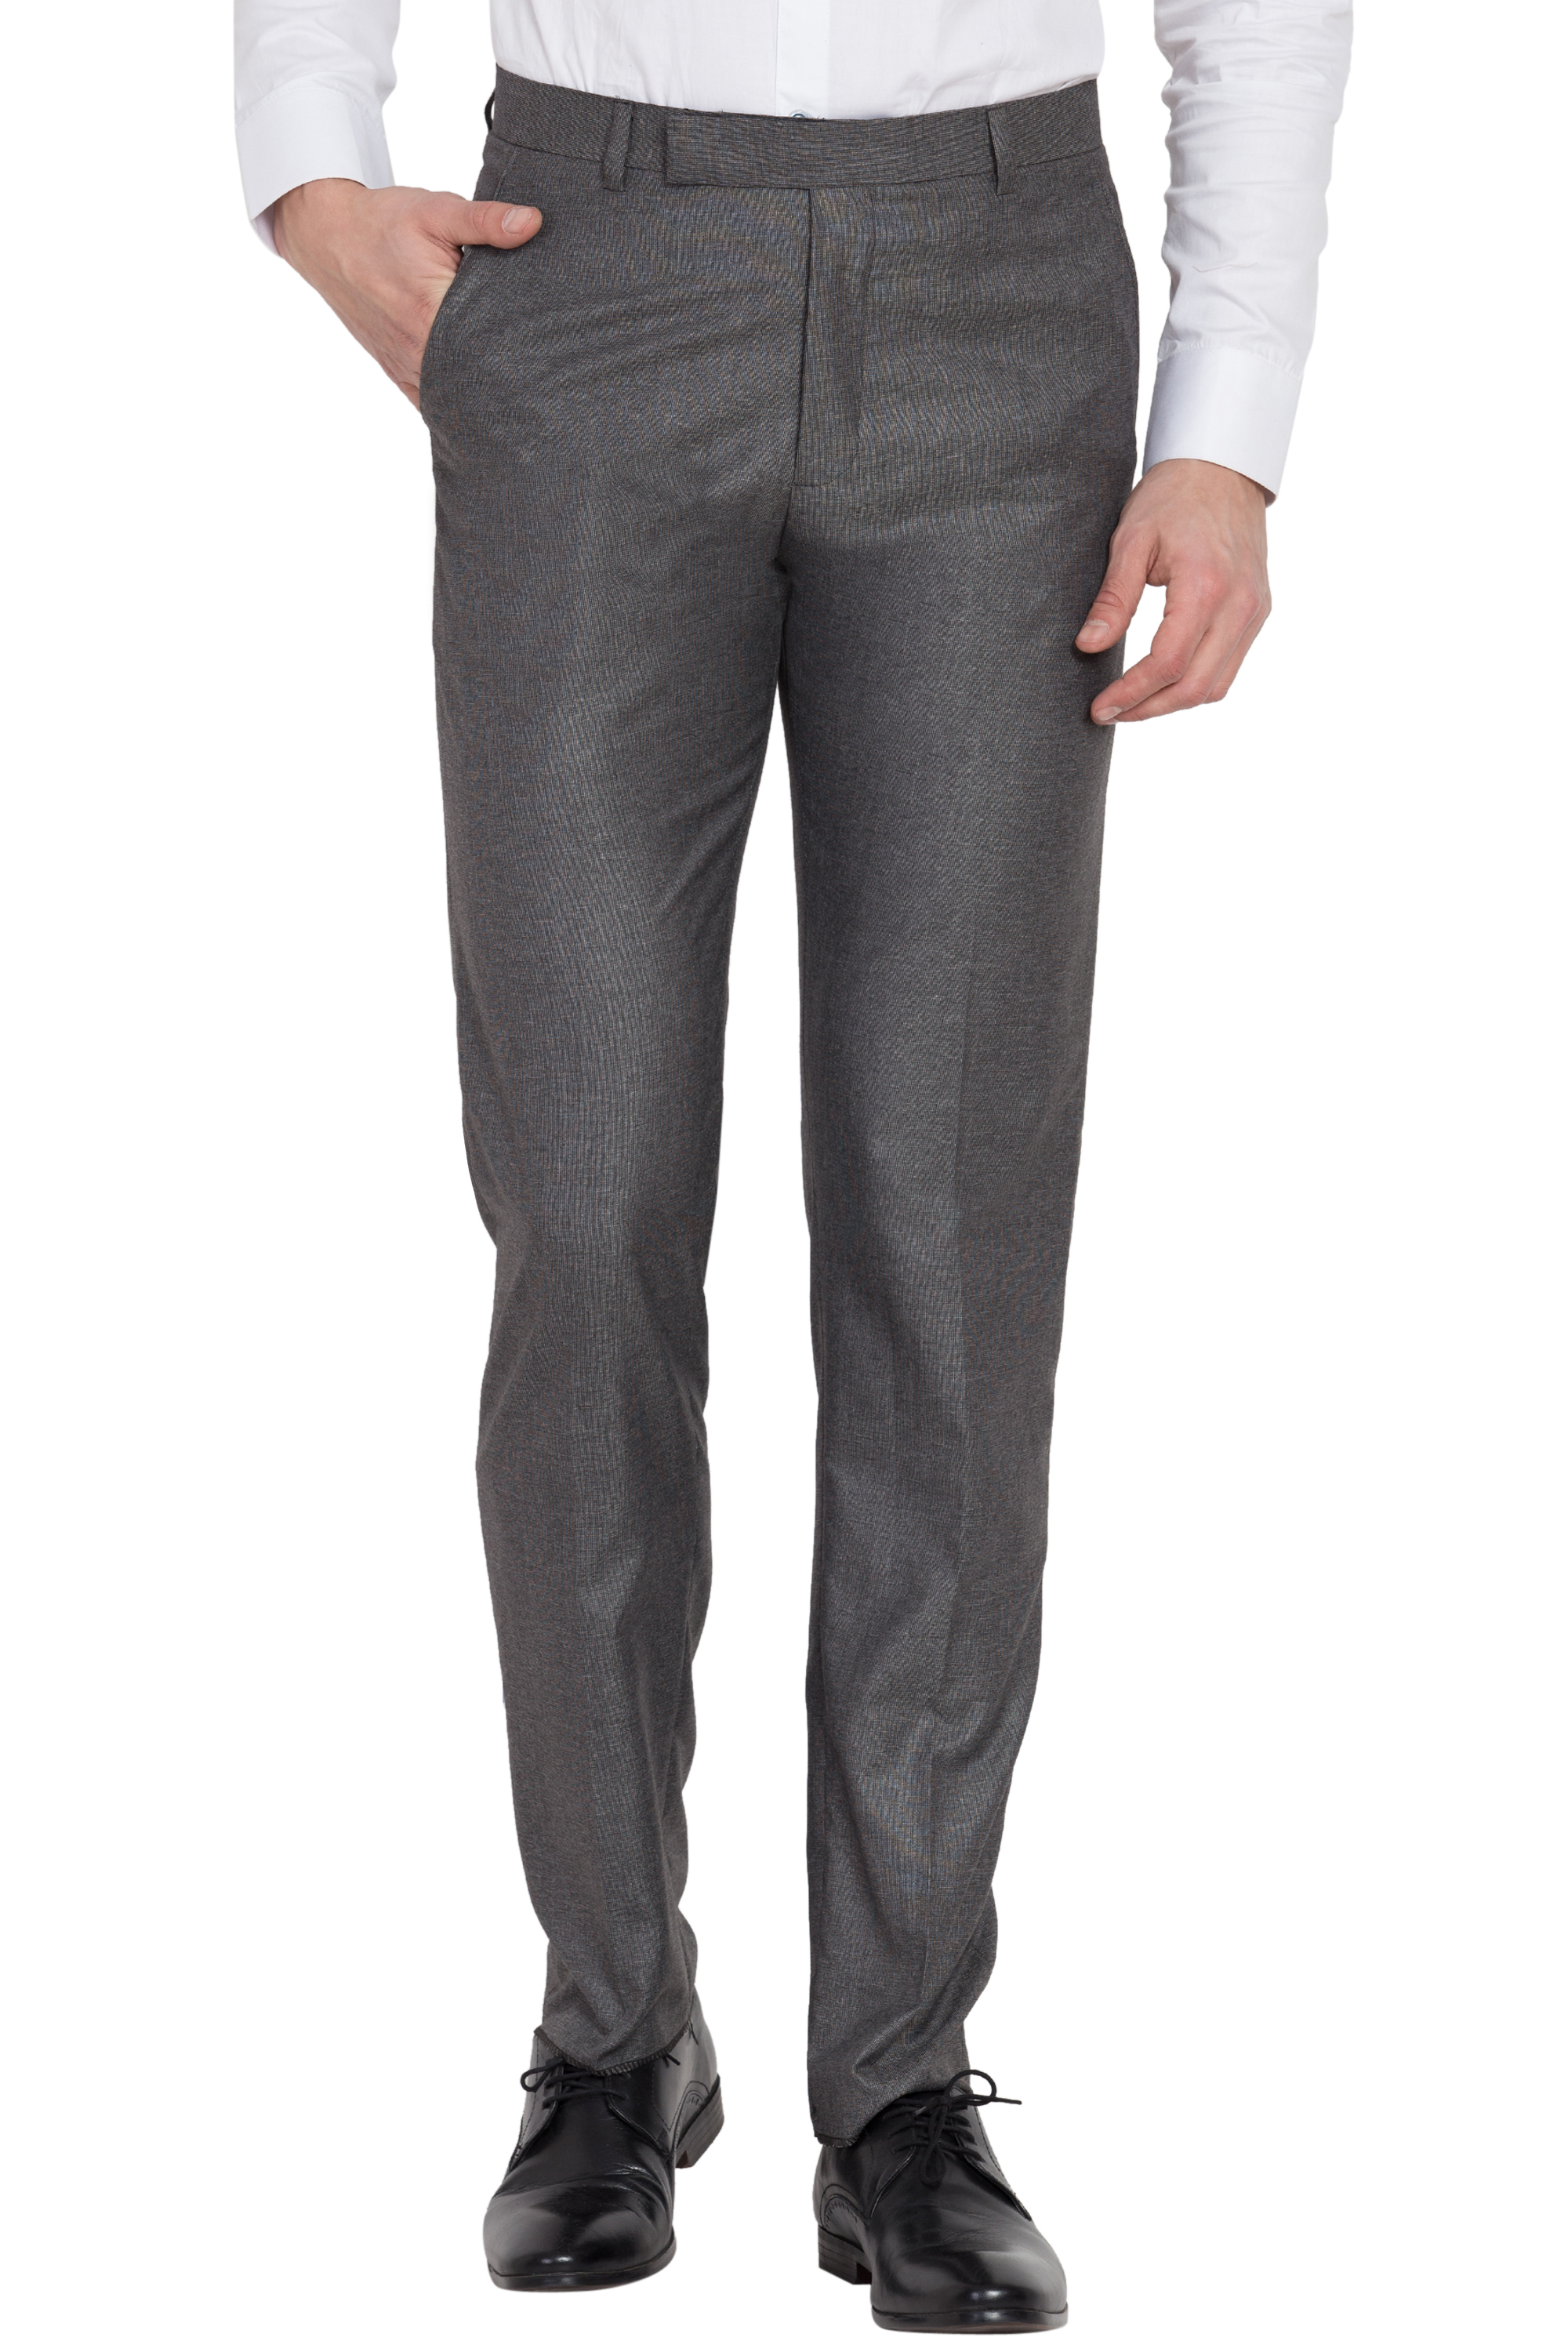 Buy Haoser Men's Poly cotton Slim fit Formal trouser for Men,Ideal for ...